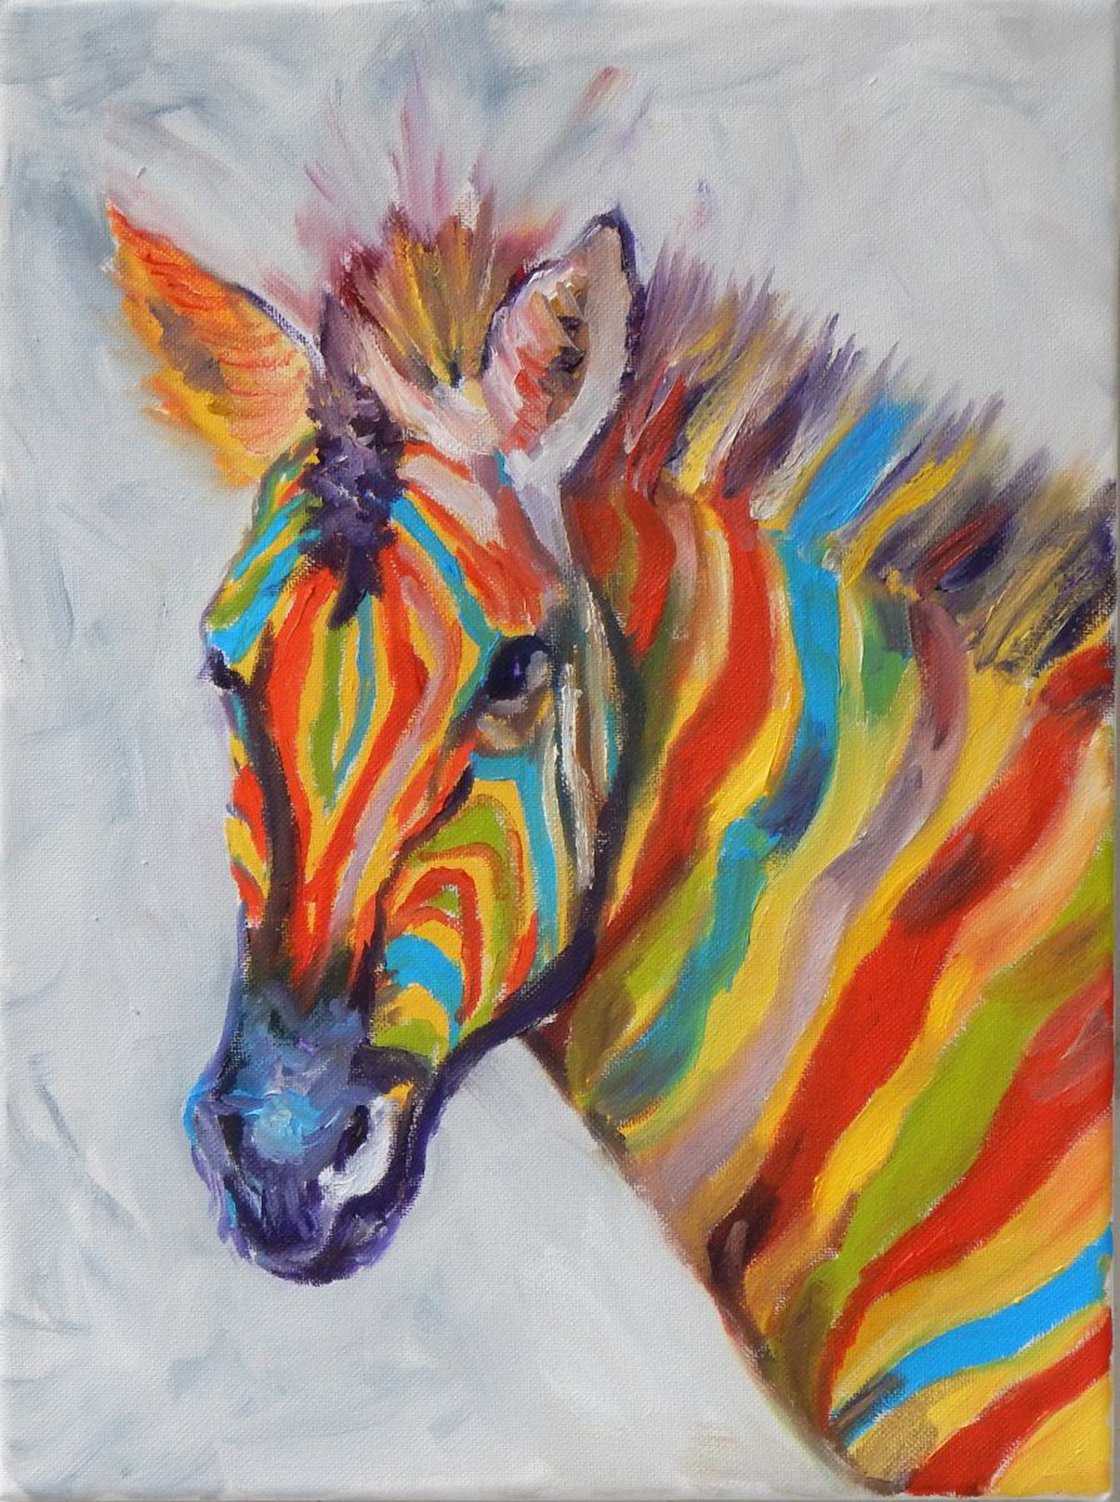 Rainbow zebra Painting by Andrii Roshkaniuk